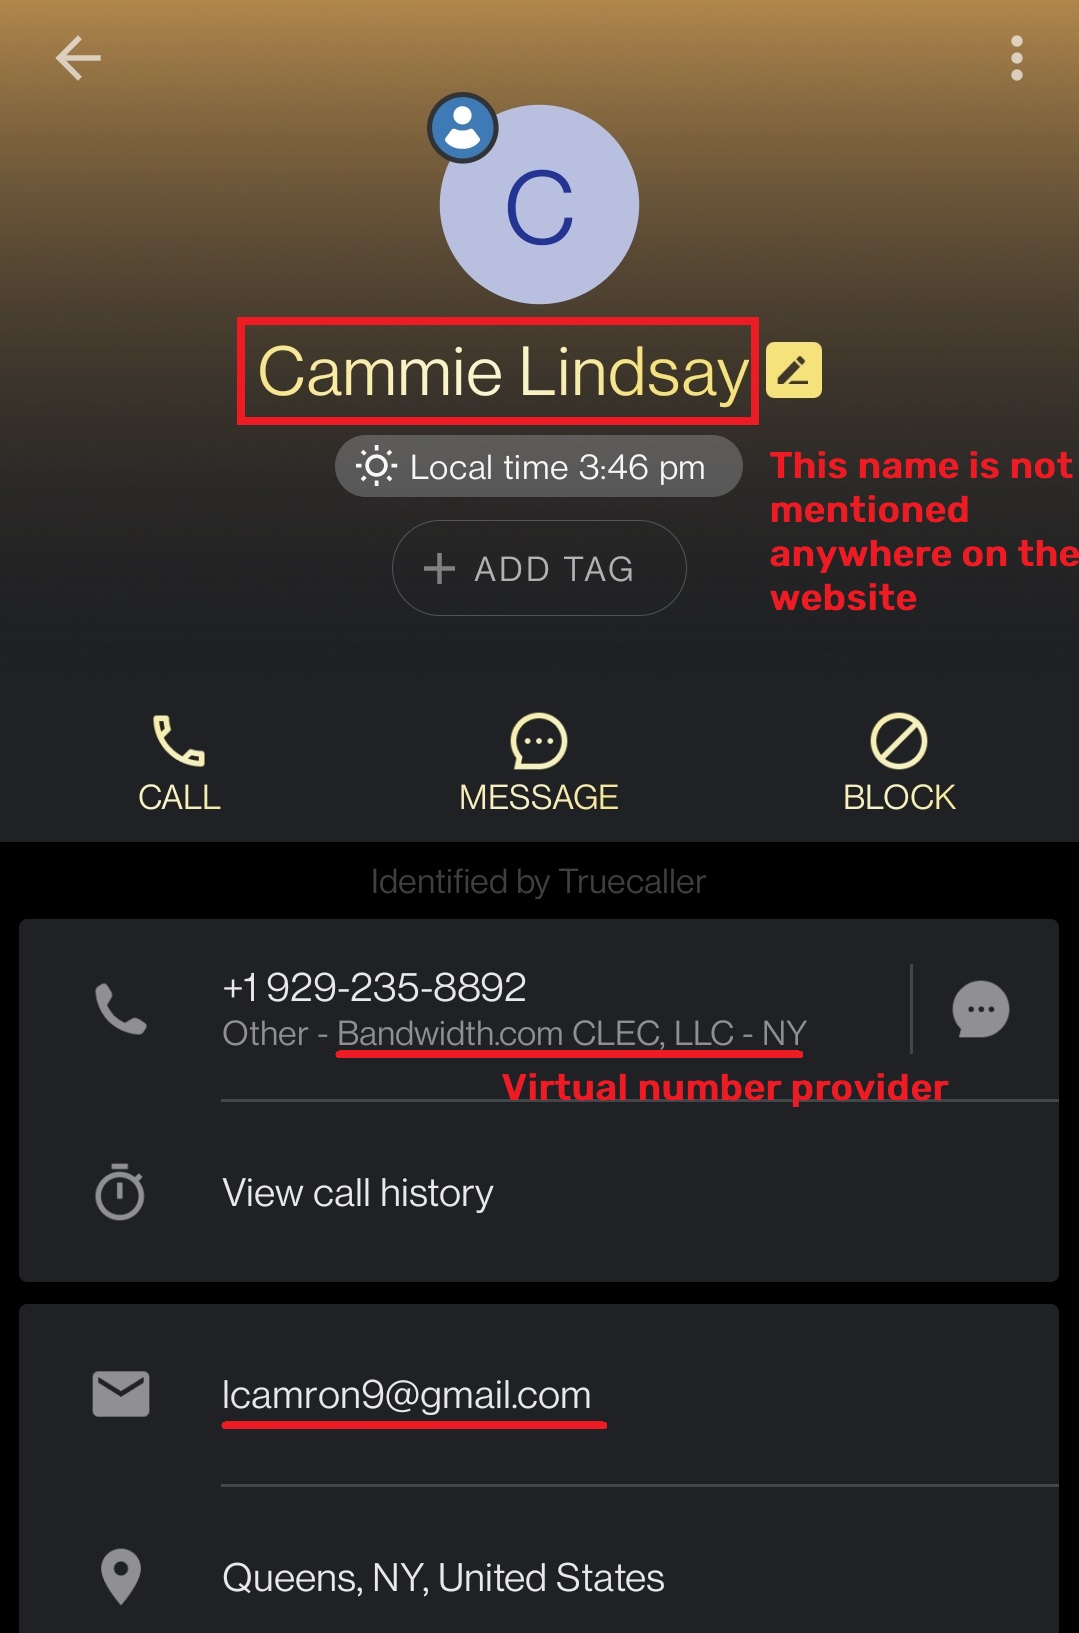 quickshopiie scam fake phone number